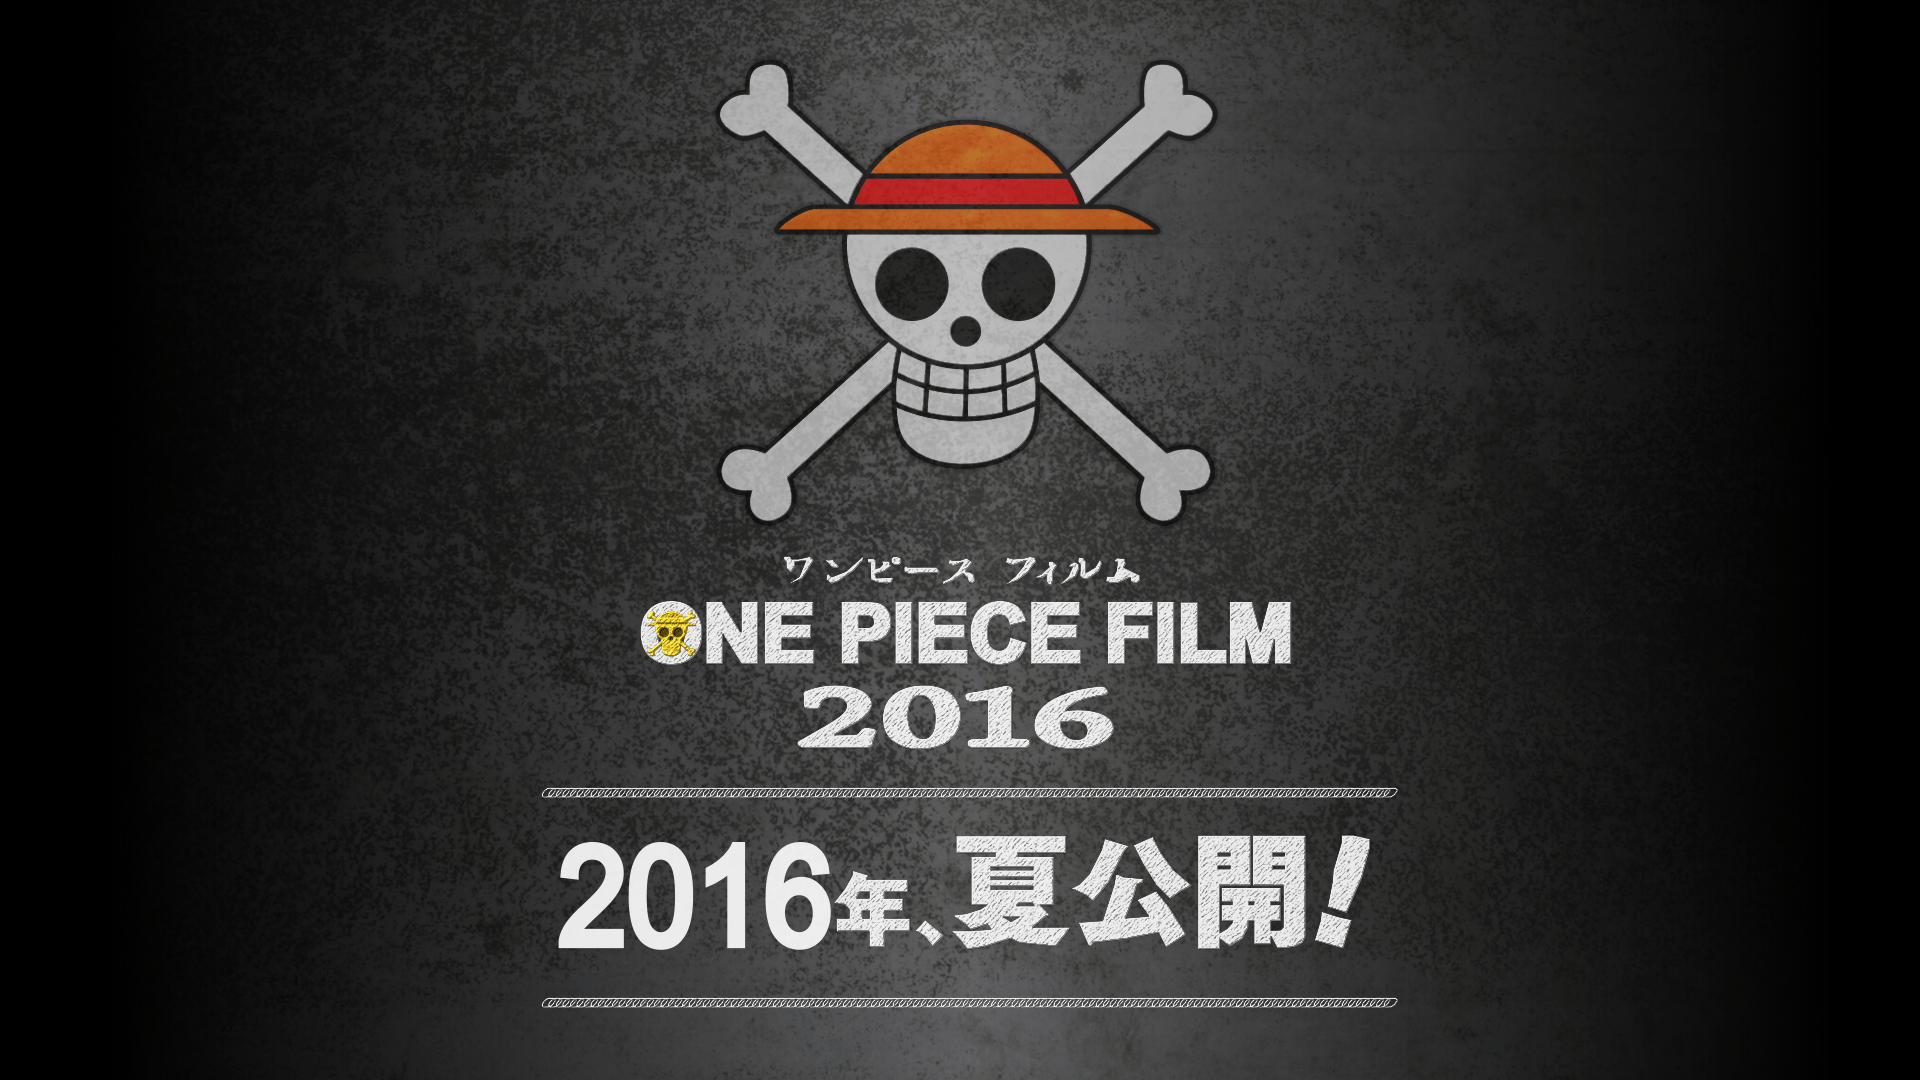 One Piece Film 2016 Promo Wallpaper